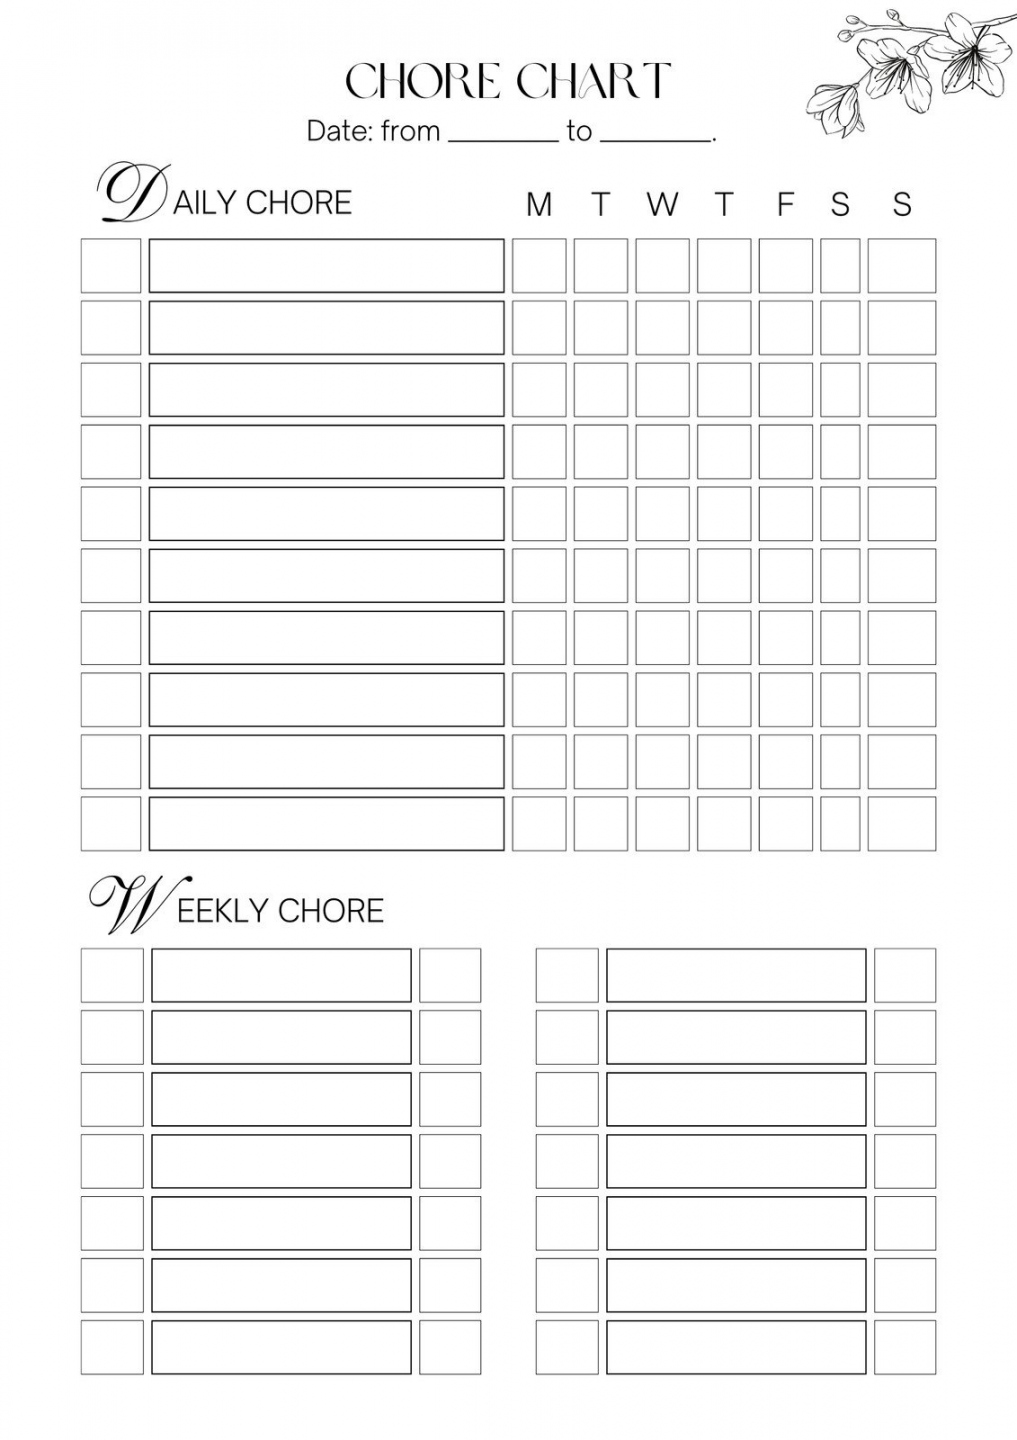 Free customizable chore chart templates to print  Canva - FREE Printables - Free Printable Chore Charts